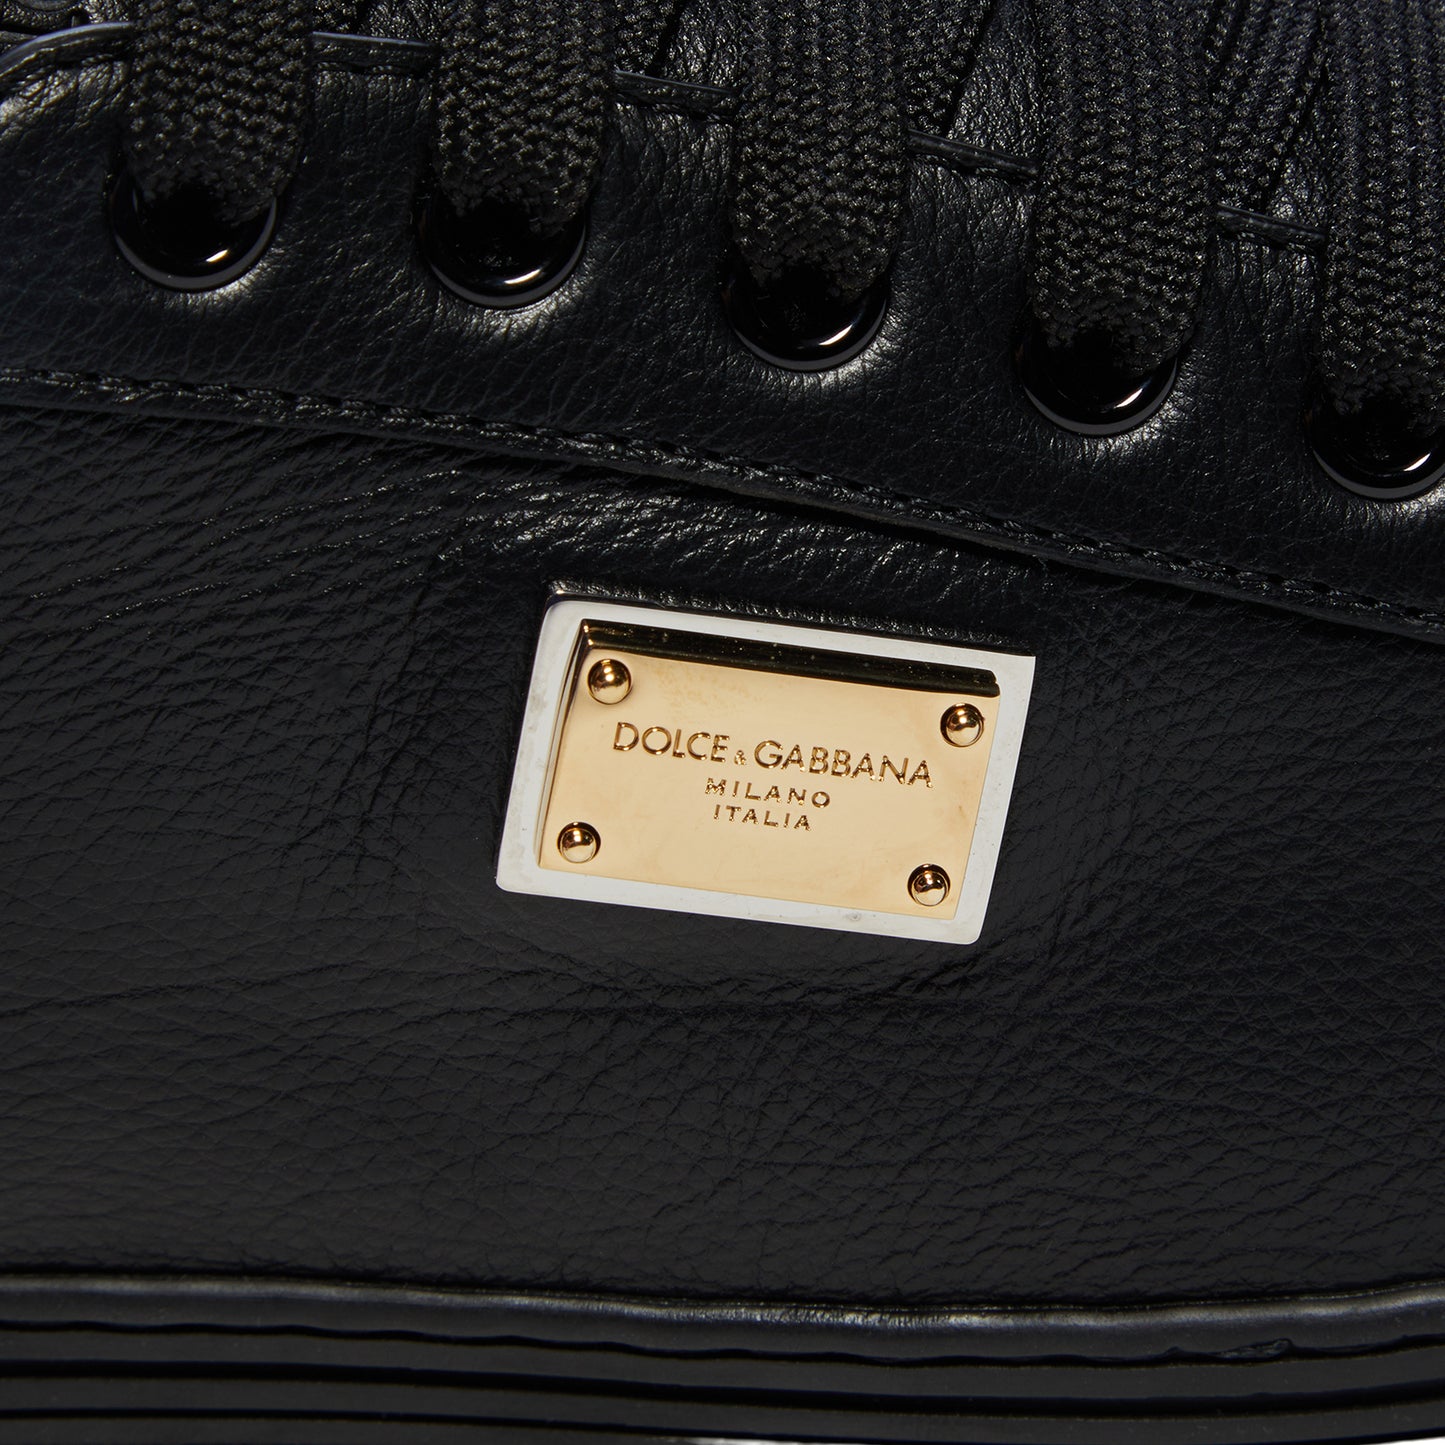 Dolce & Gabbana Saint Tropez Calfskin Low-Top Sneakers (Black)